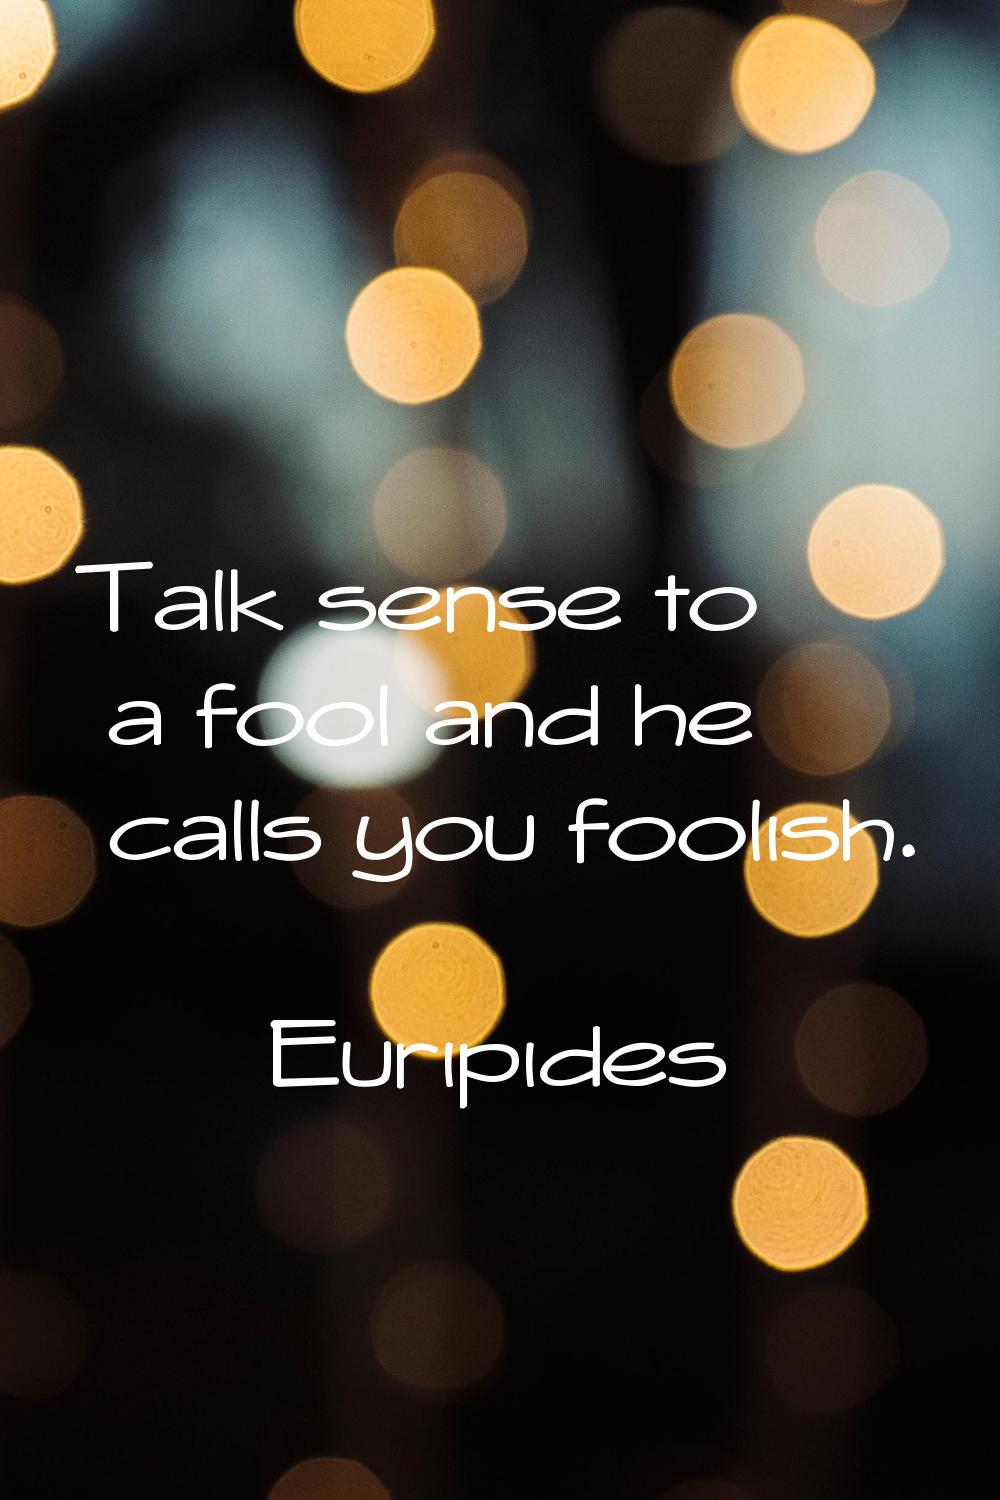 Talk sense to a fool and he calls you foolish.